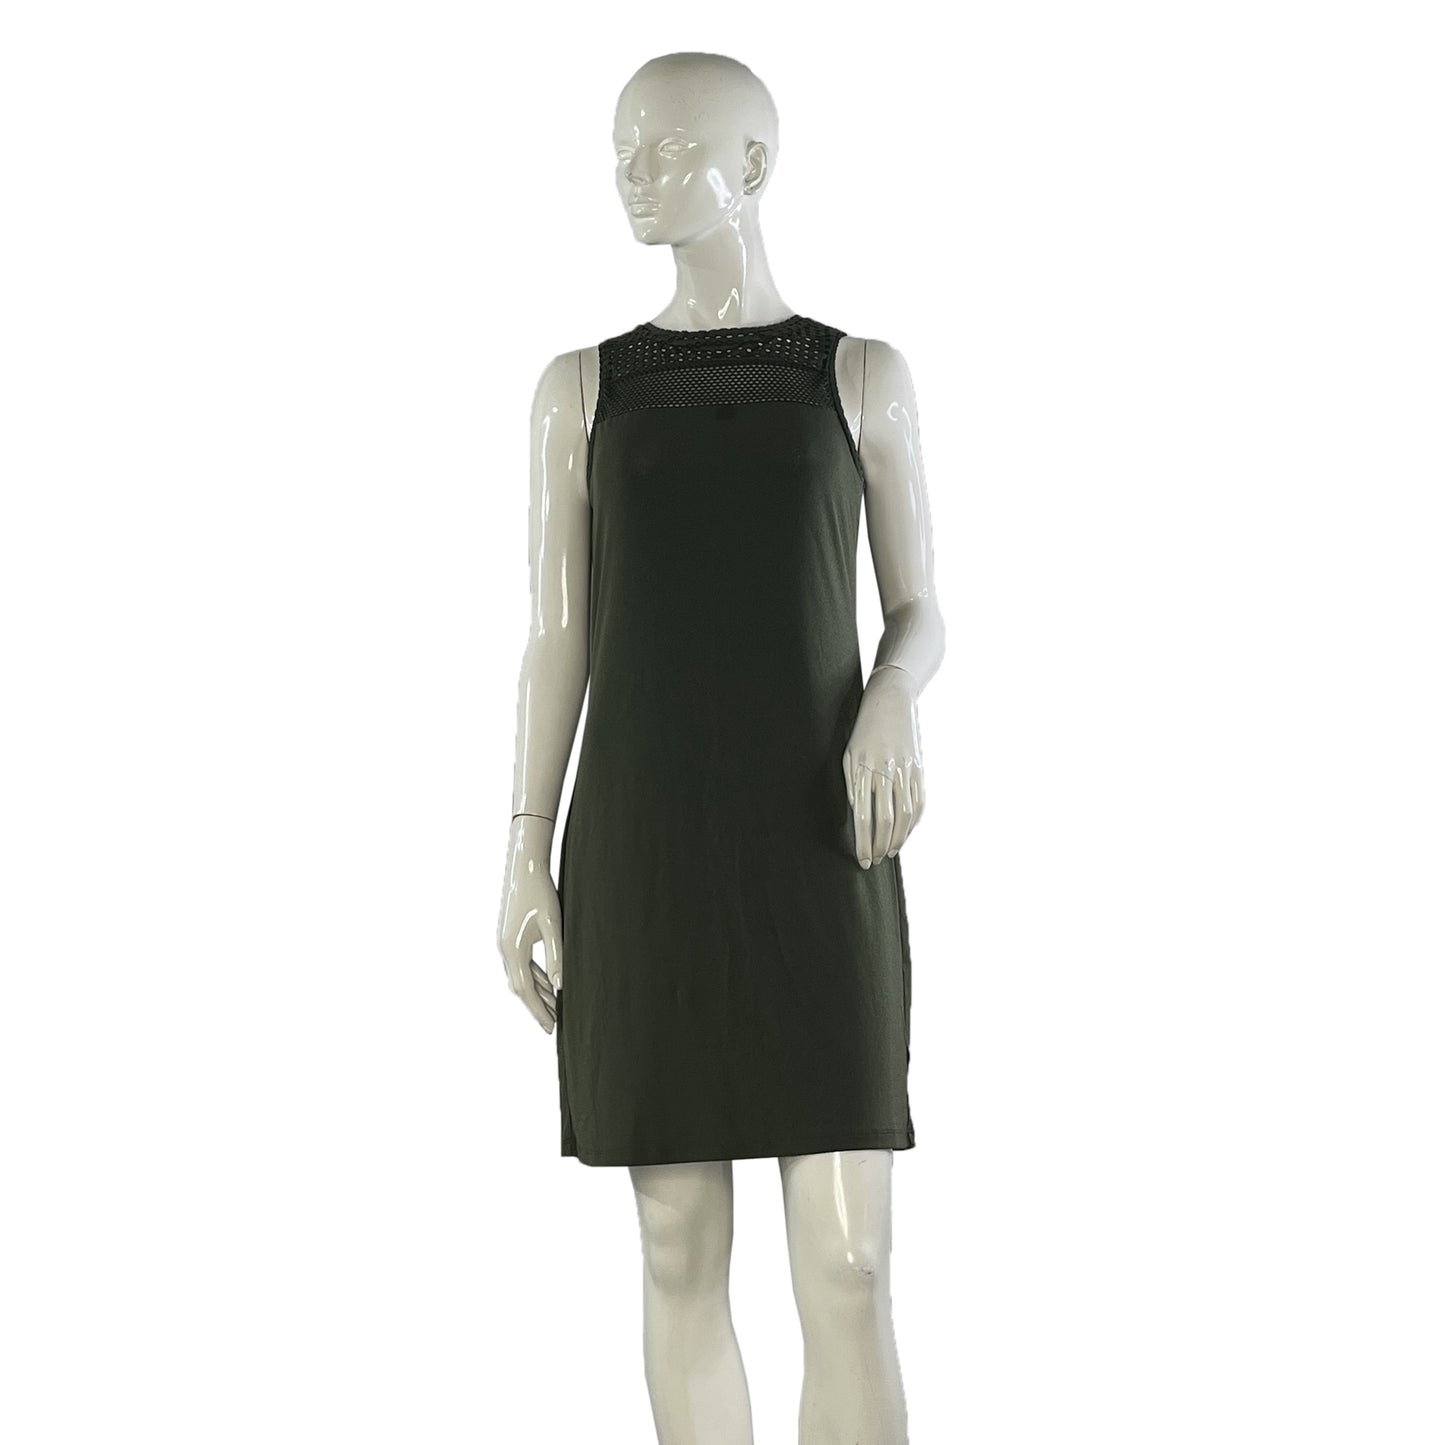 Michael Kors Dress Sleeveless Olive Size S SKU 000414